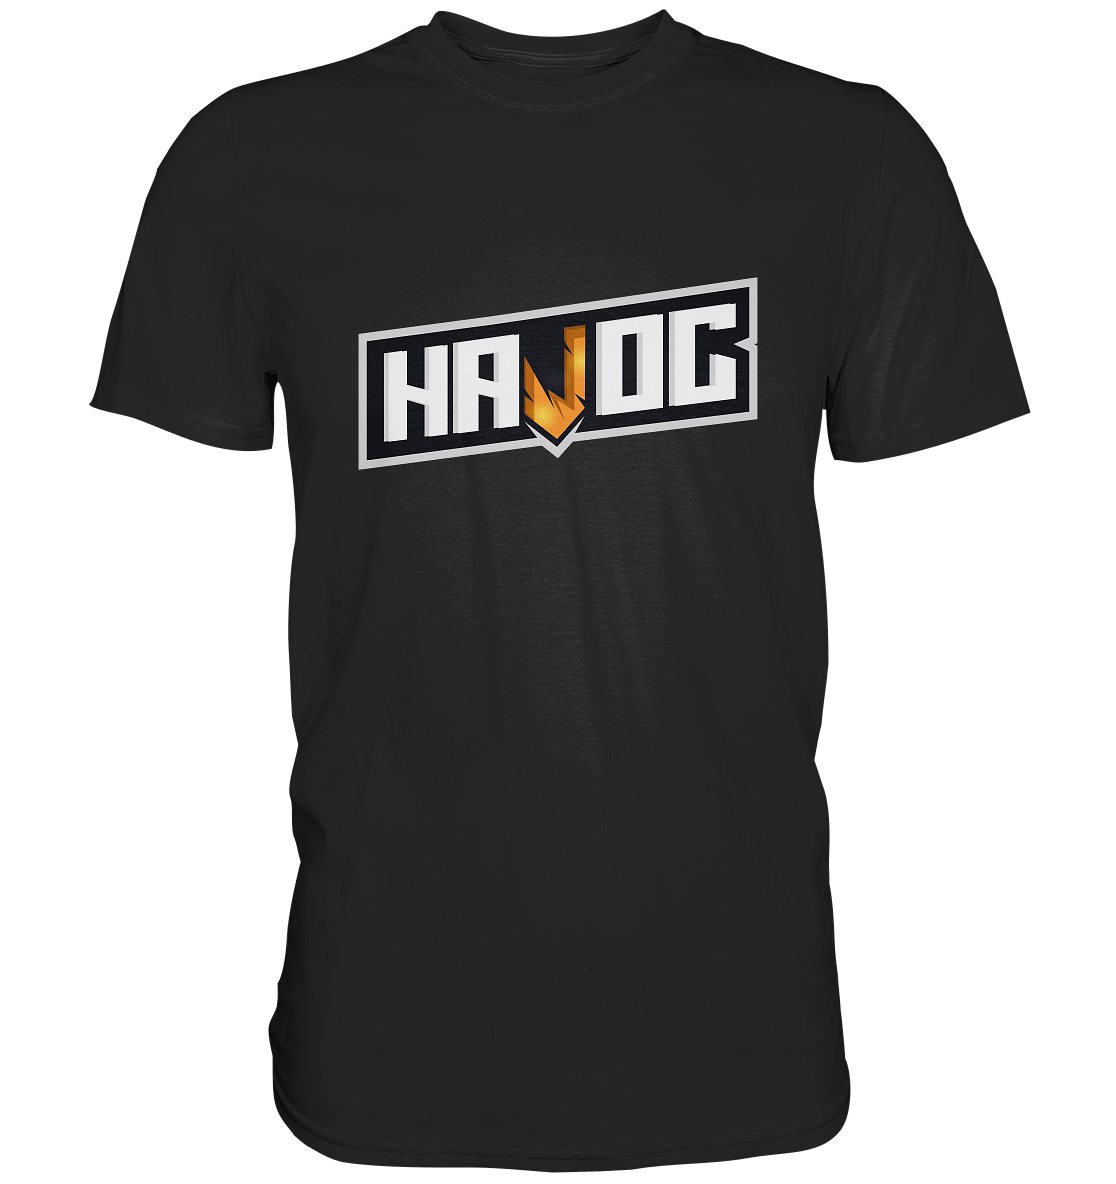 HAVOC Classic - Basic Shirt